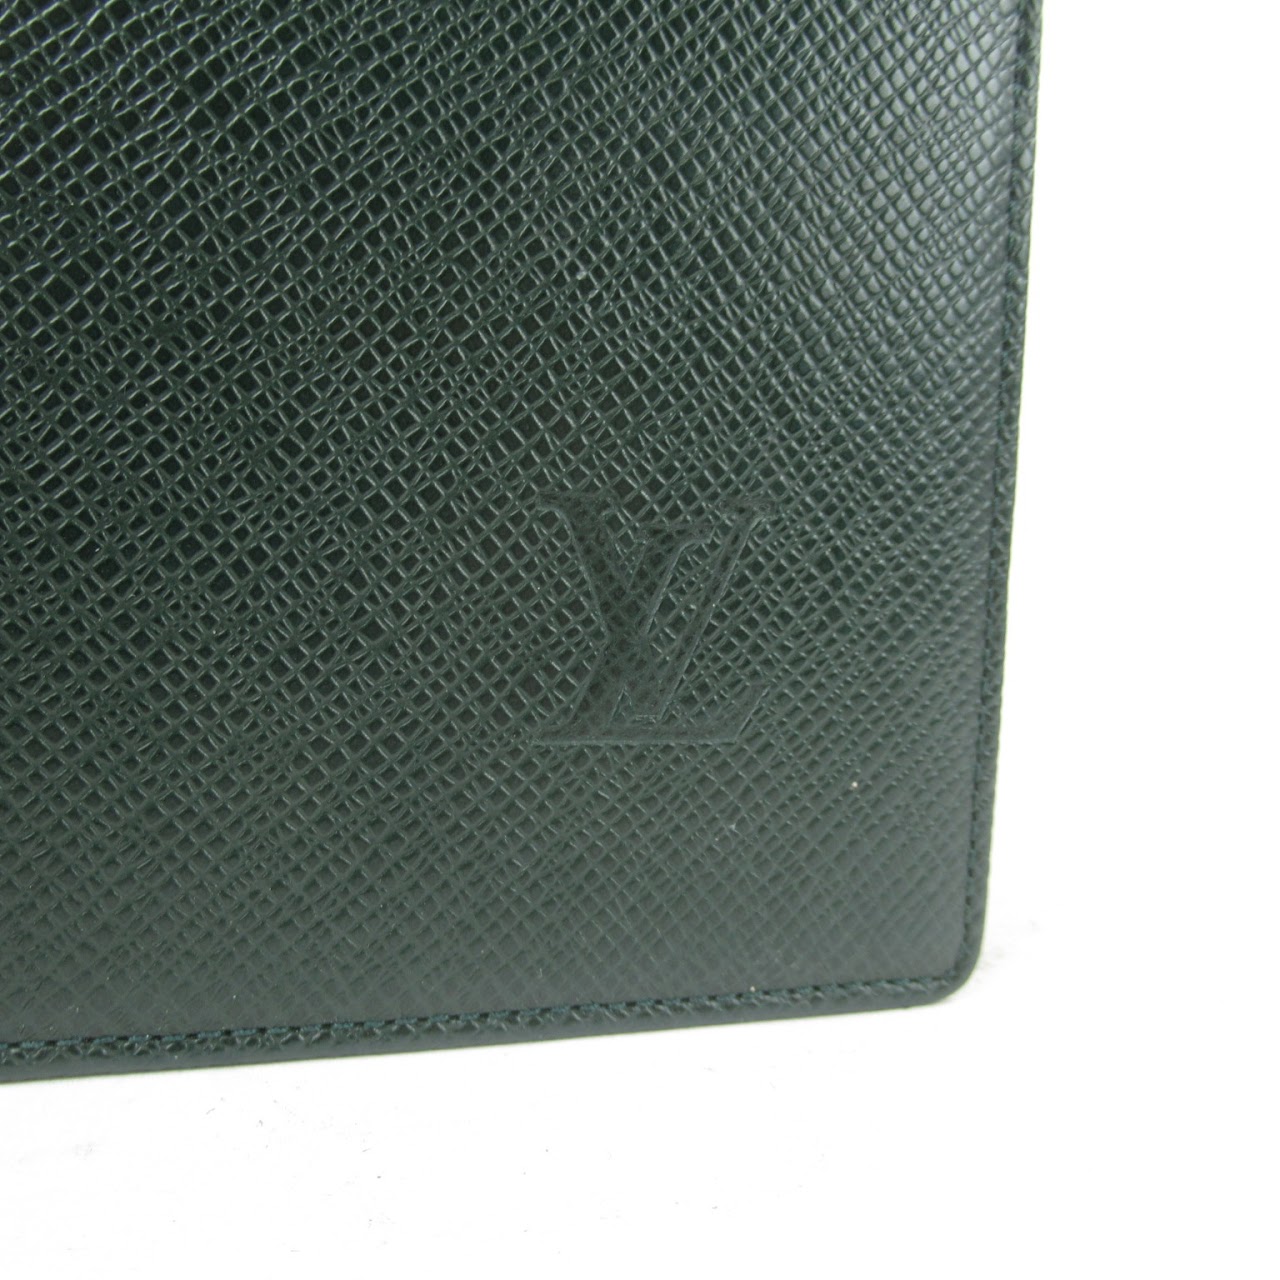 Louis Vuitton Document Folder - 4 For Sale on 1stDibs  louis vuitton  portfolio folder, louis vuitton folder case, vintage louis vuitton document  holder